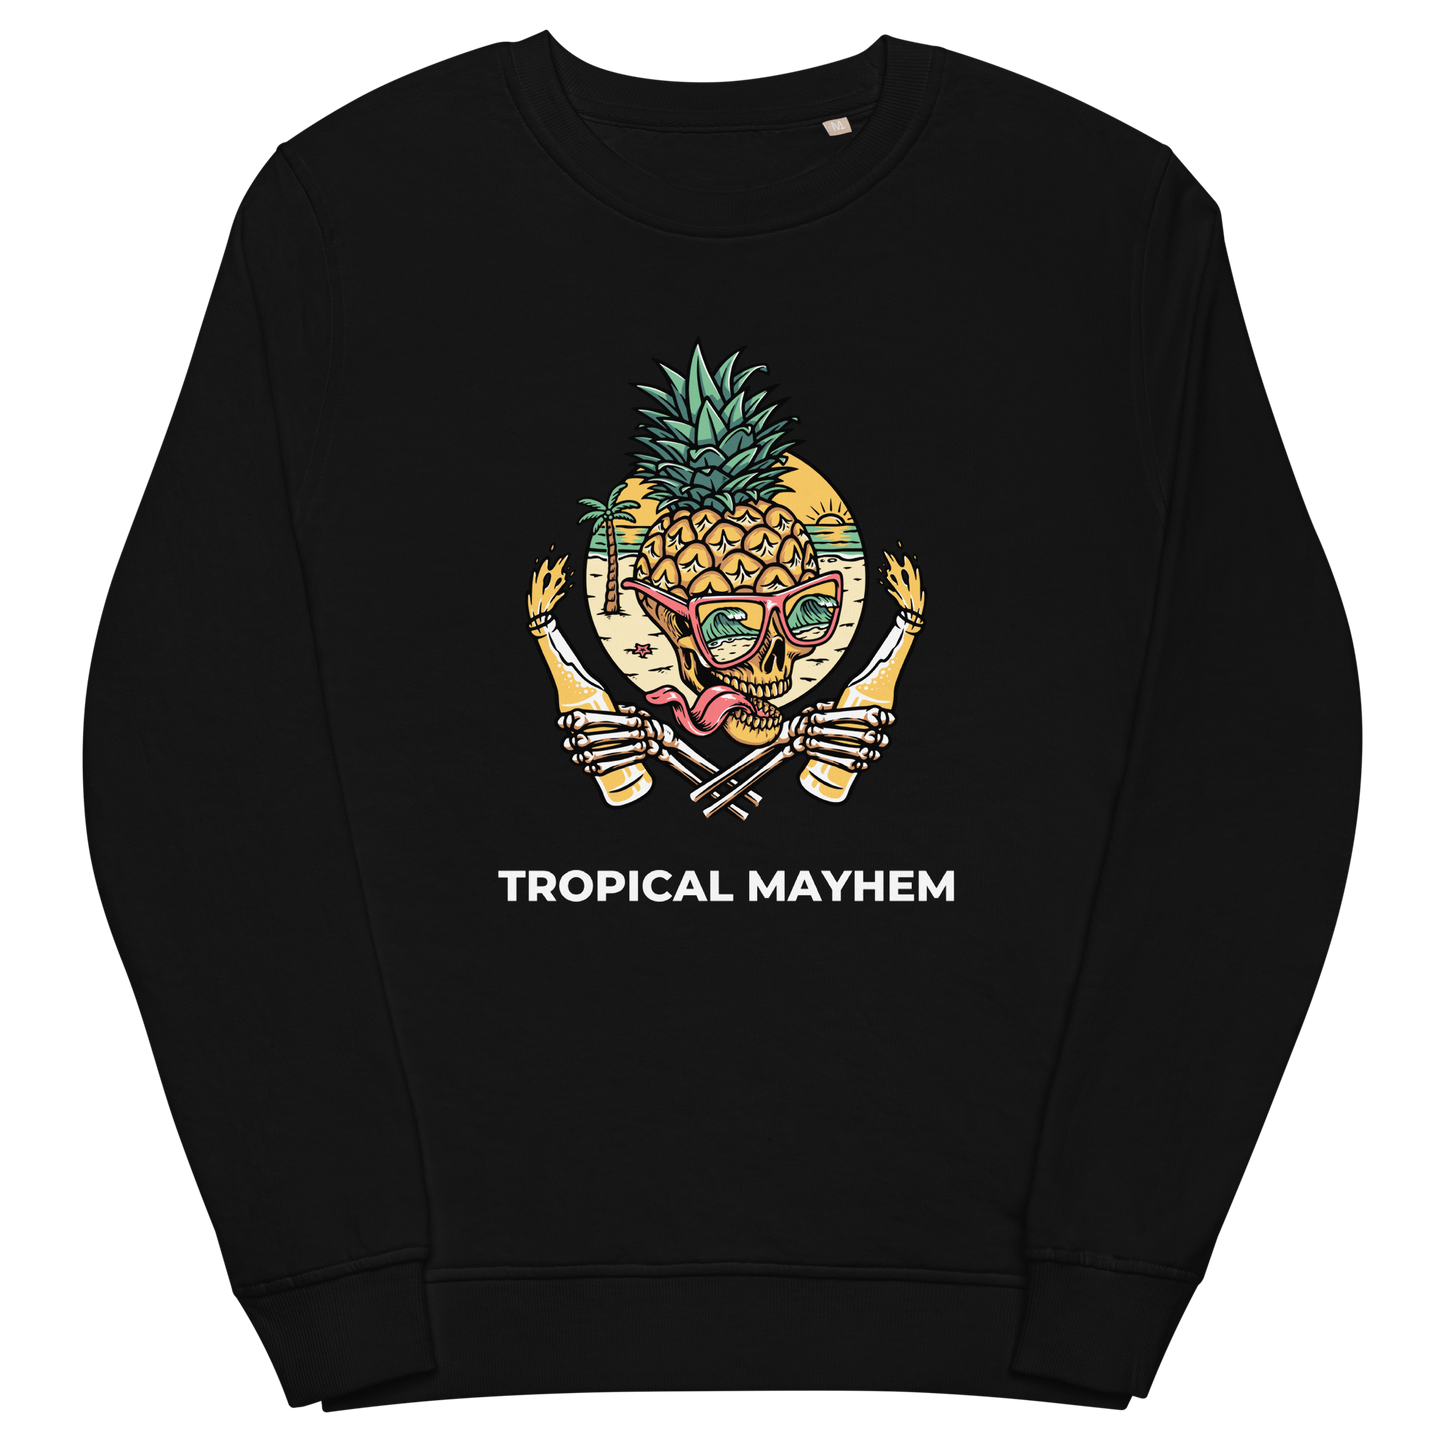 Black Organic Cotton Tropical Mayhem Sweatshirt featuring a Crazy Pineapple Skull graphic on the chest - Funny Graphic Pineapple Sweatshirts - Boozy Fox